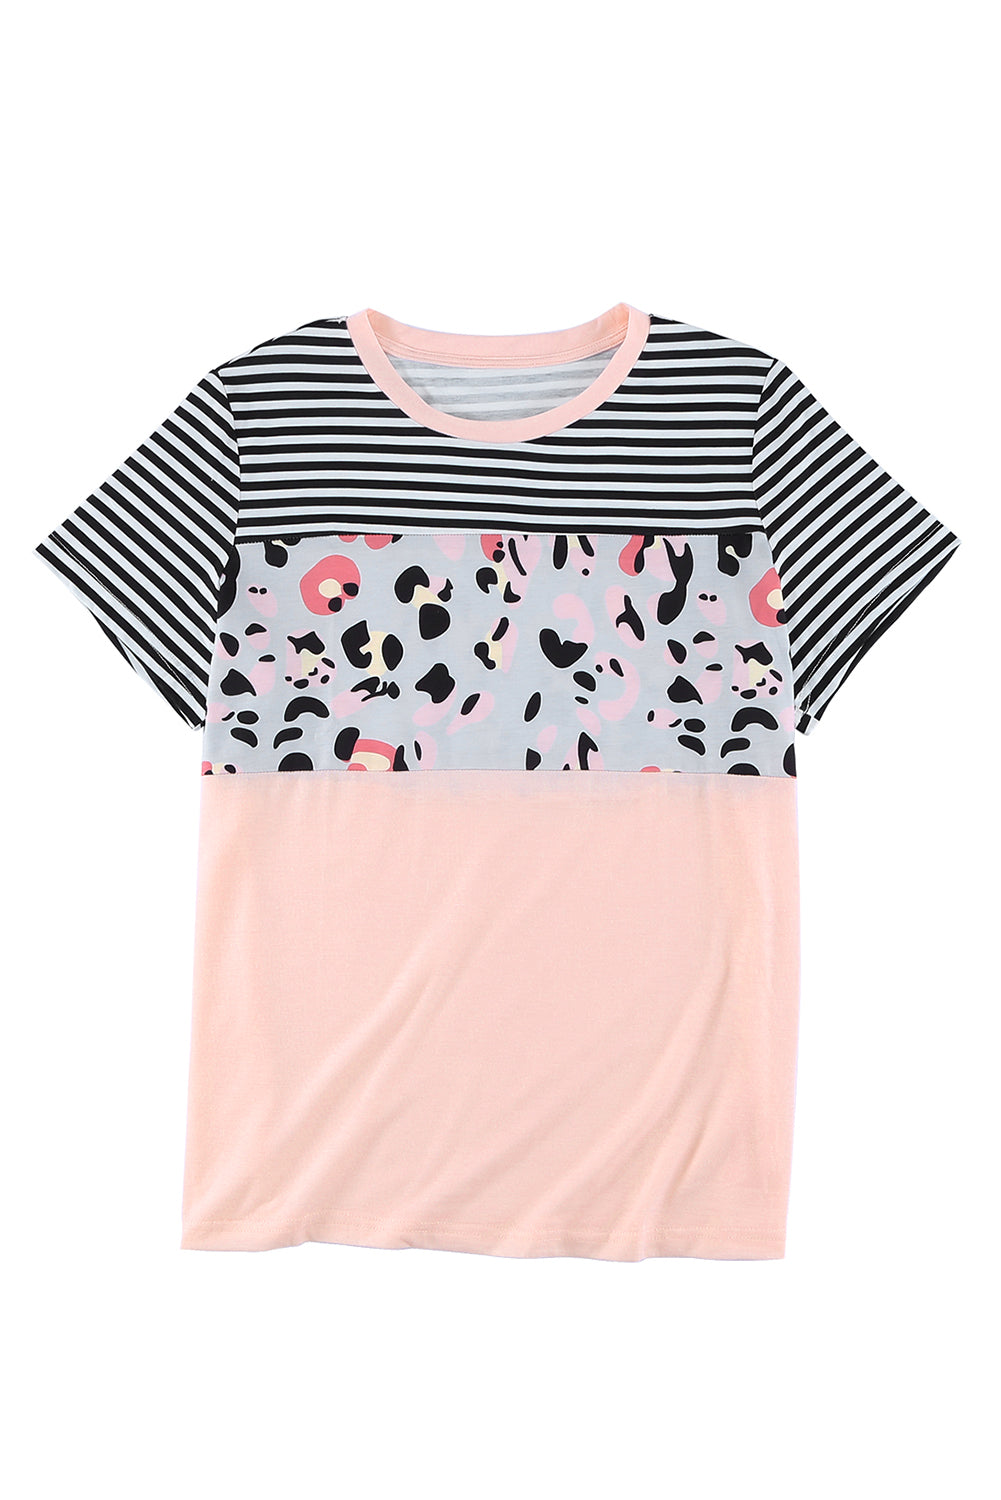 Pink Stripes Leopard Colorblock Plus Size Short Sleeve Top